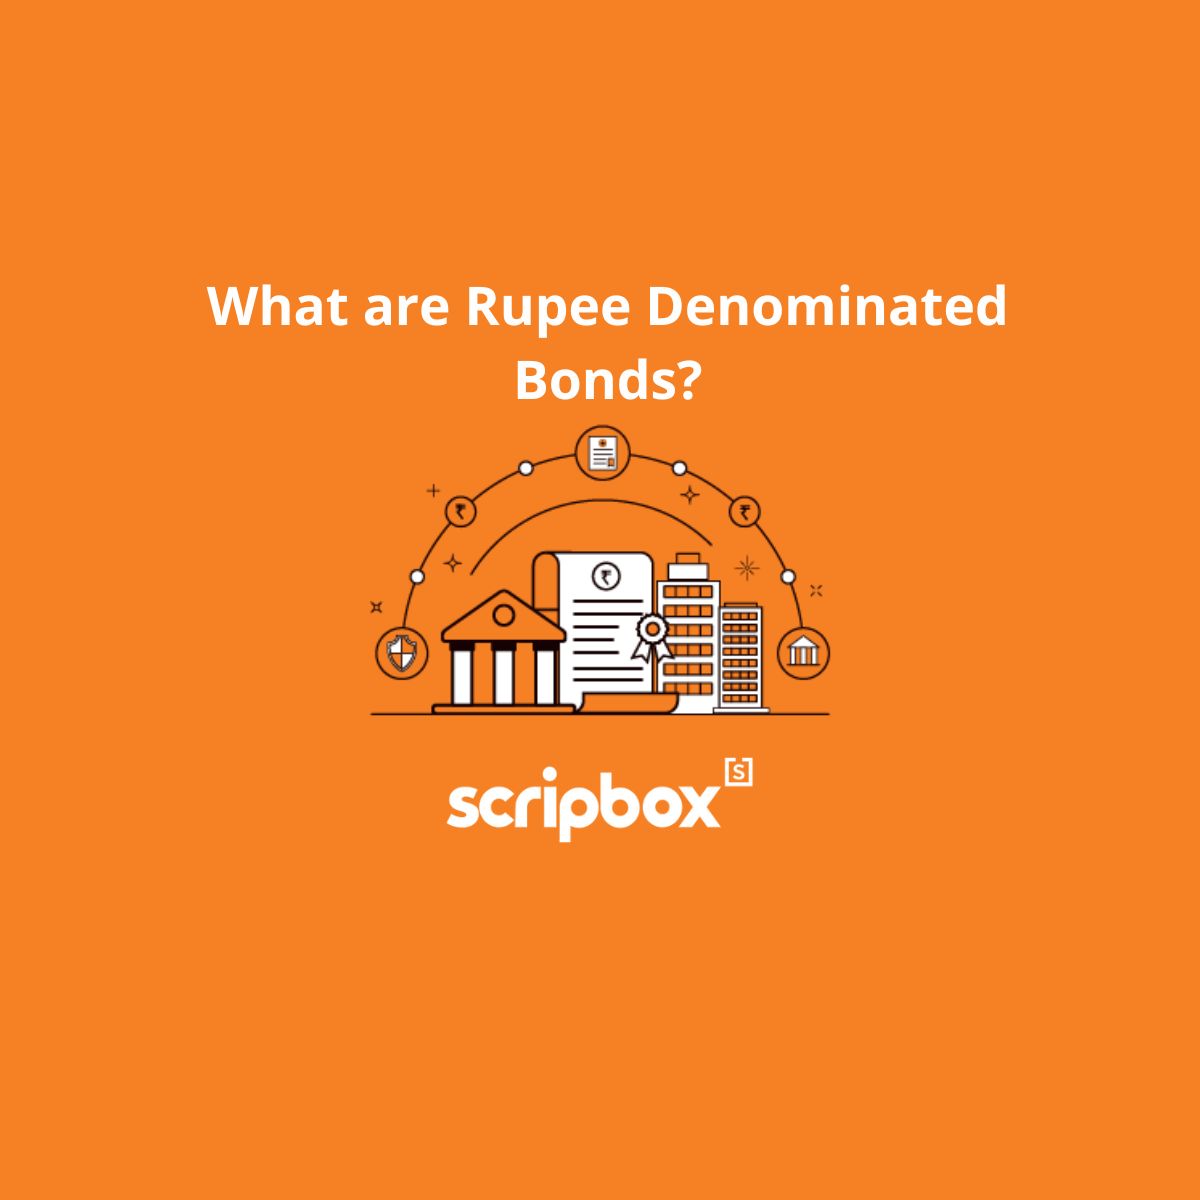 rupee denominated bonds